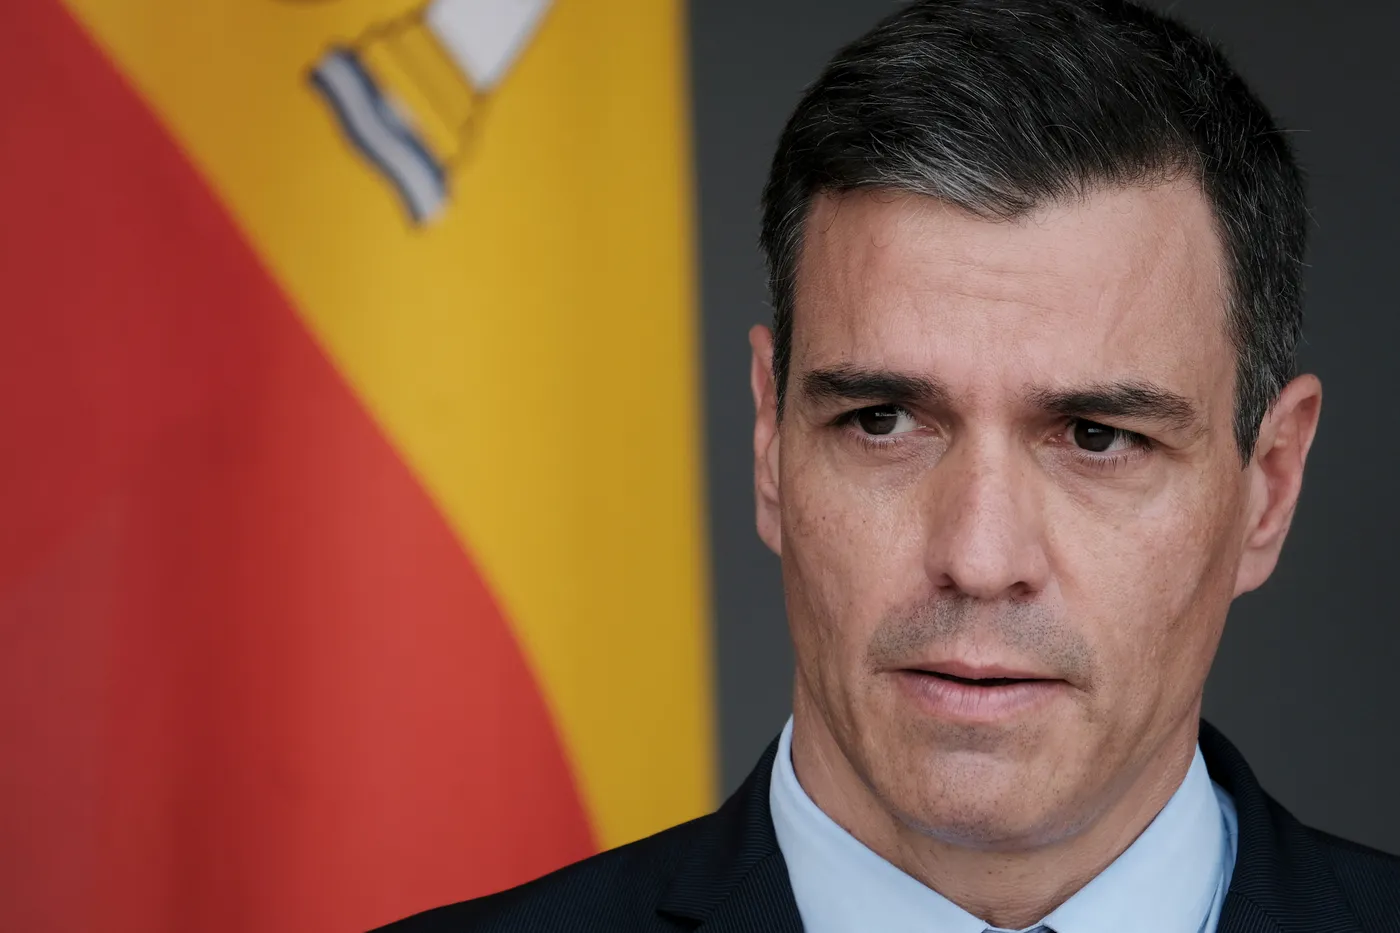 премьер министр испании